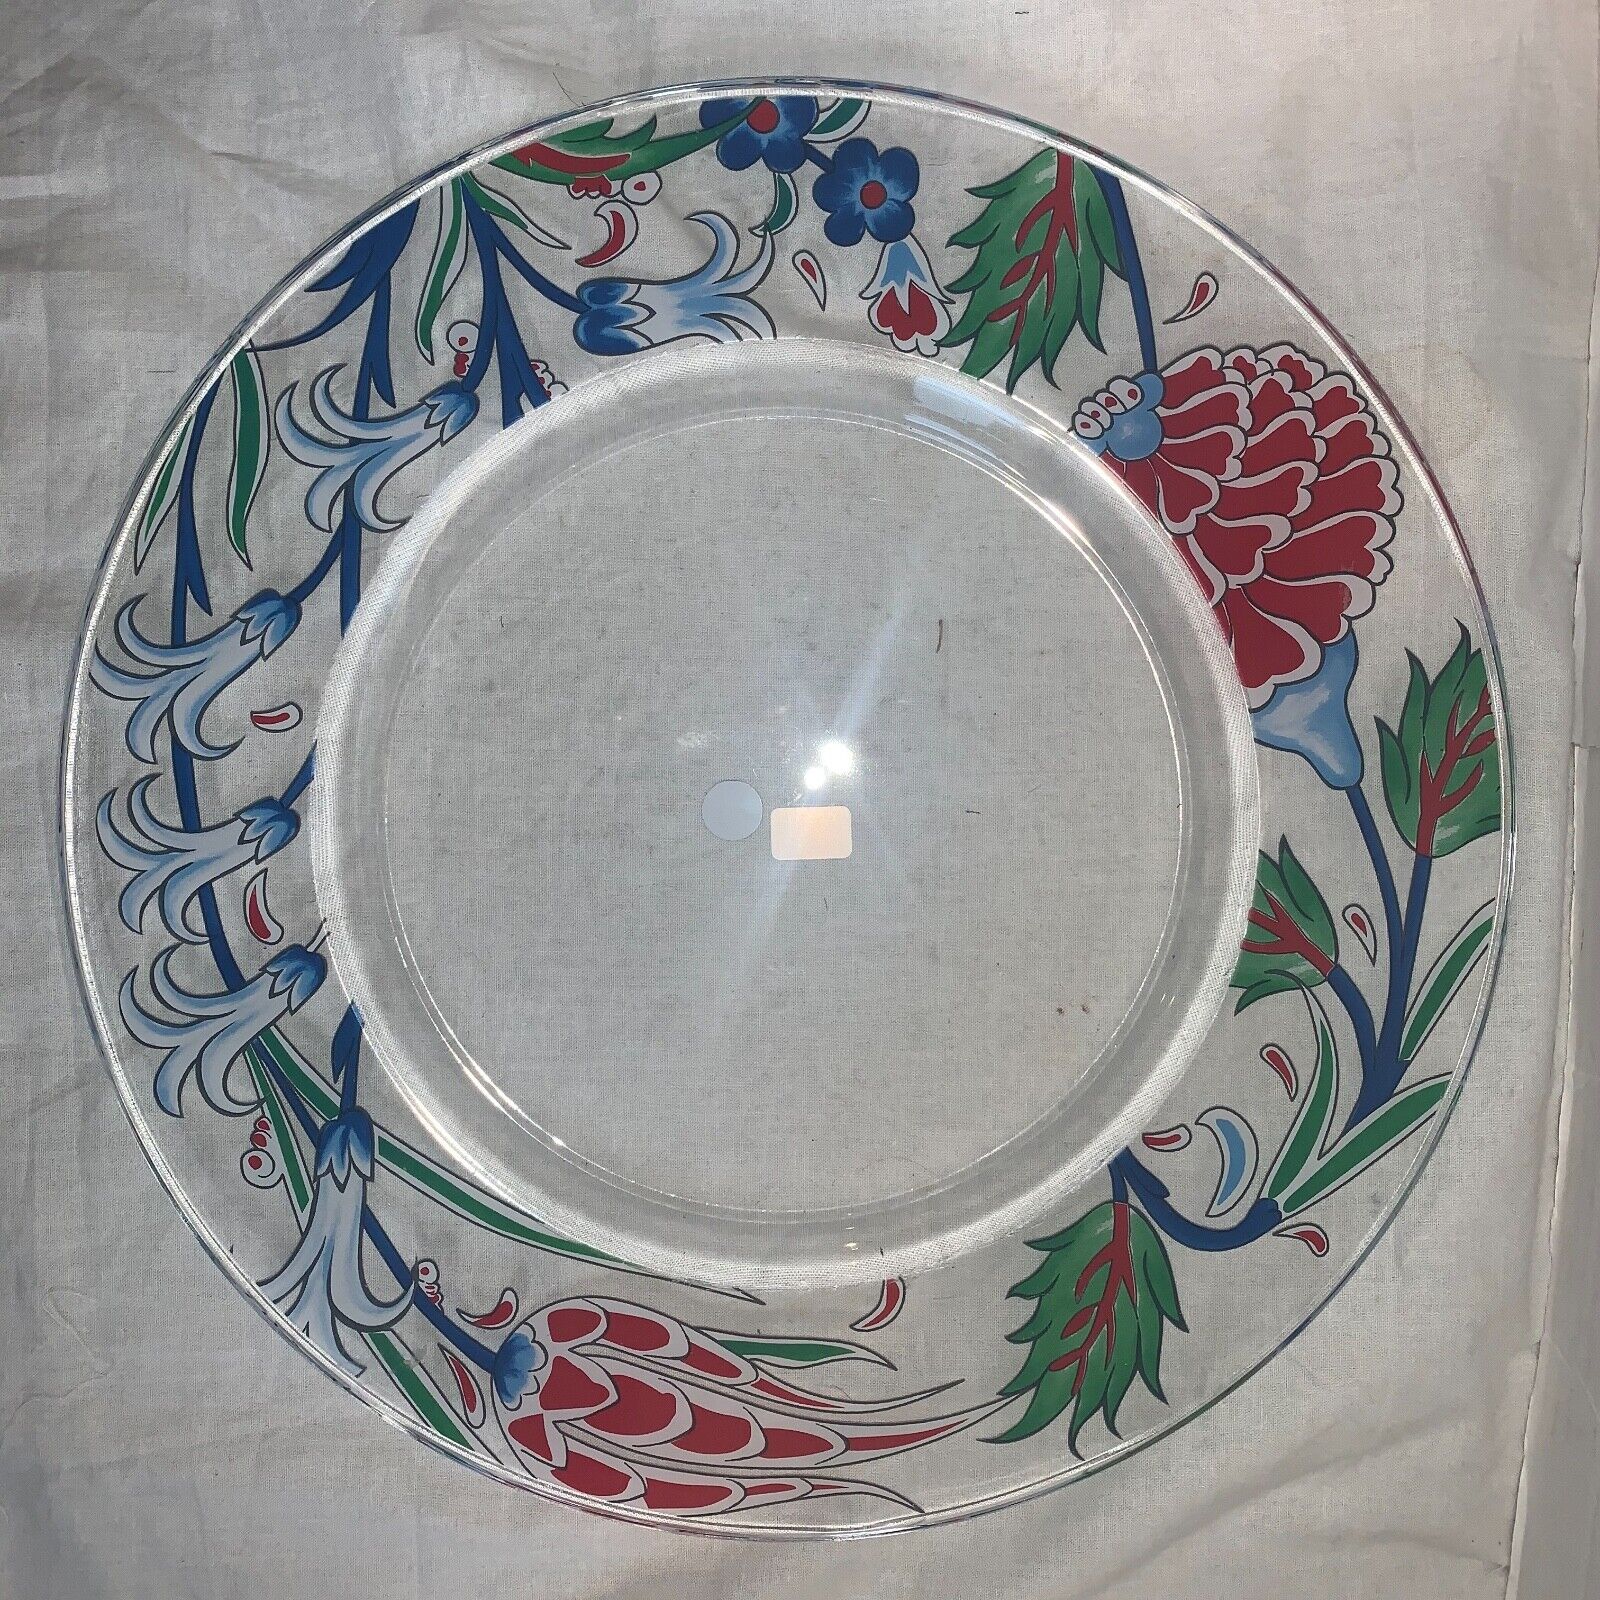 Sadece Elde Yikayiniz, Istanbul Turkish Art Glass Painted Plate